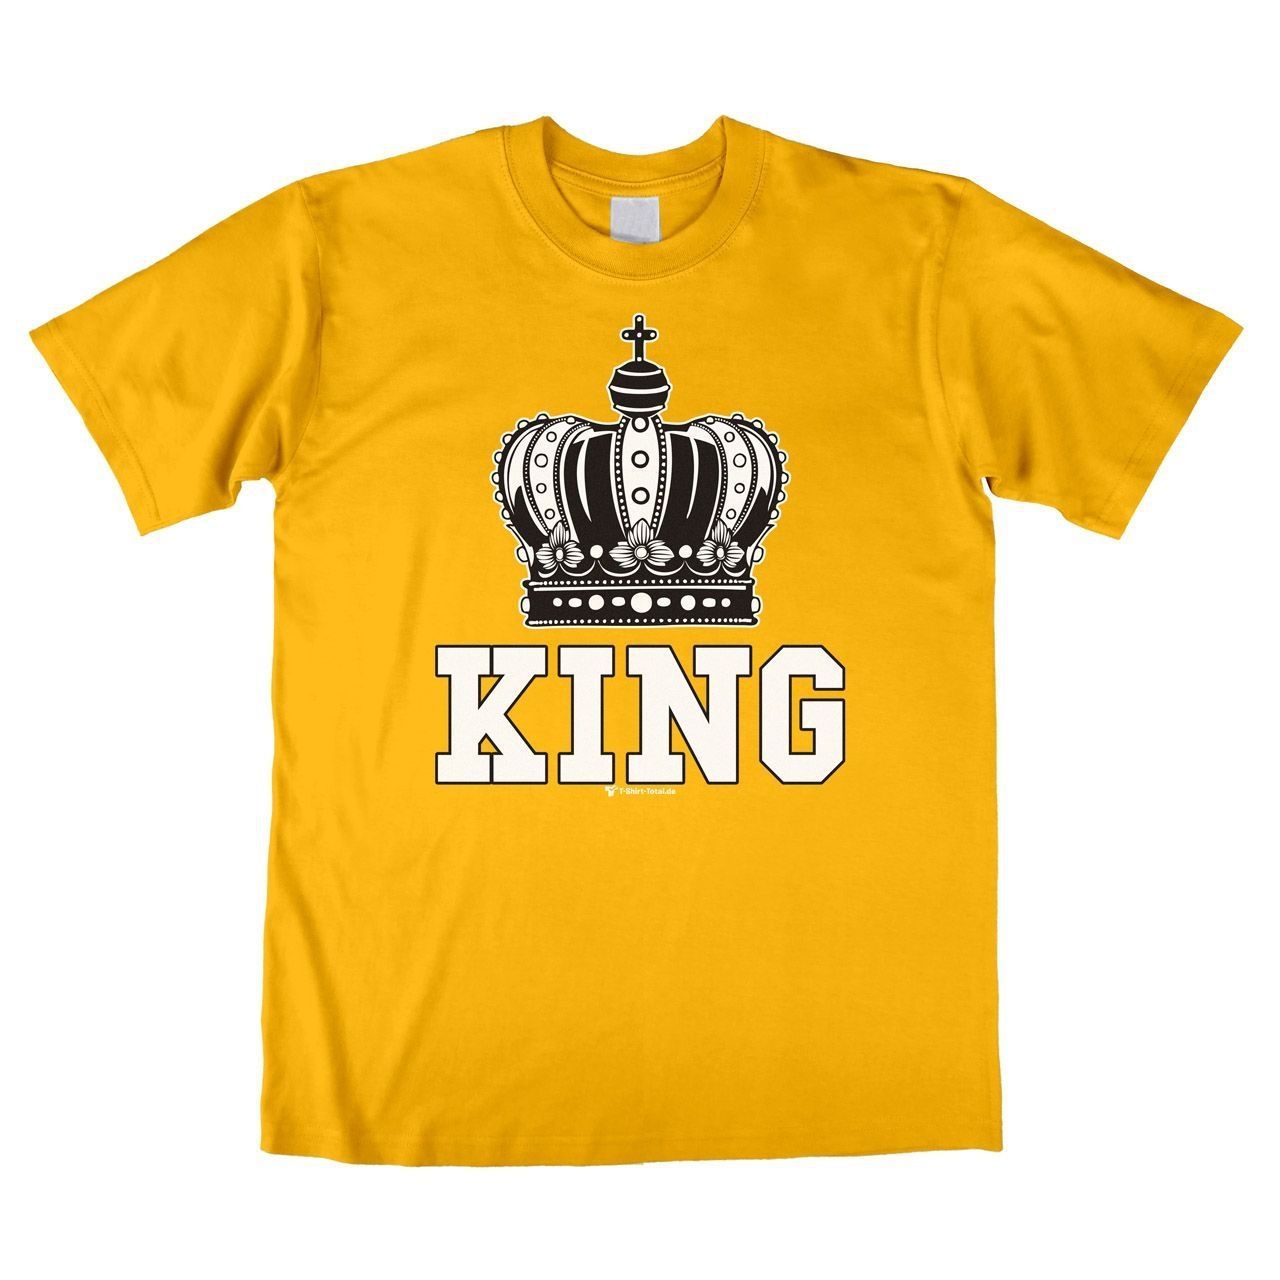 King Unisex T-Shirt gelb Large